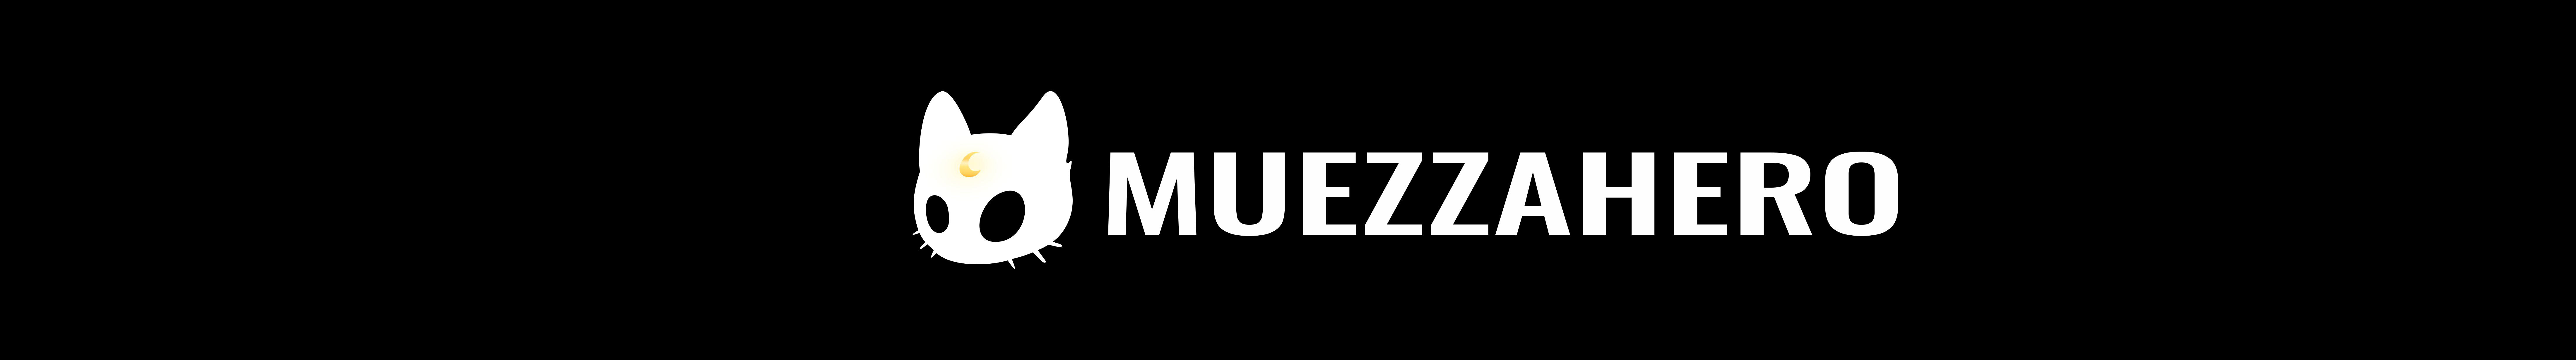 Muezzahero .'s profile banner